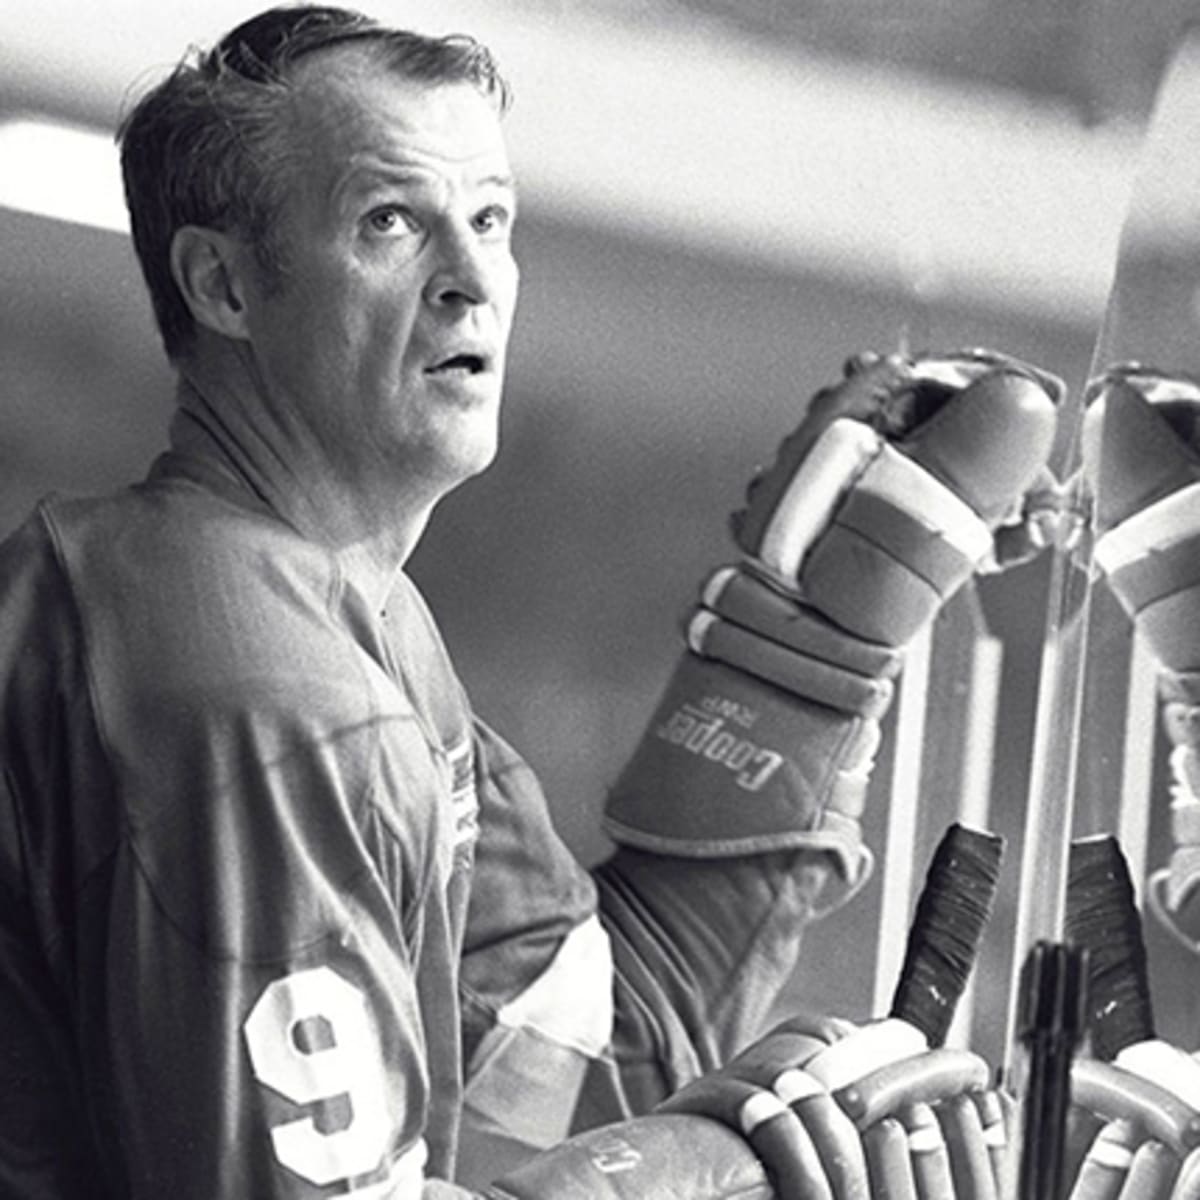 Gordie Howe, the gritty and mighty 'Mr. Hockey,' dies at 88